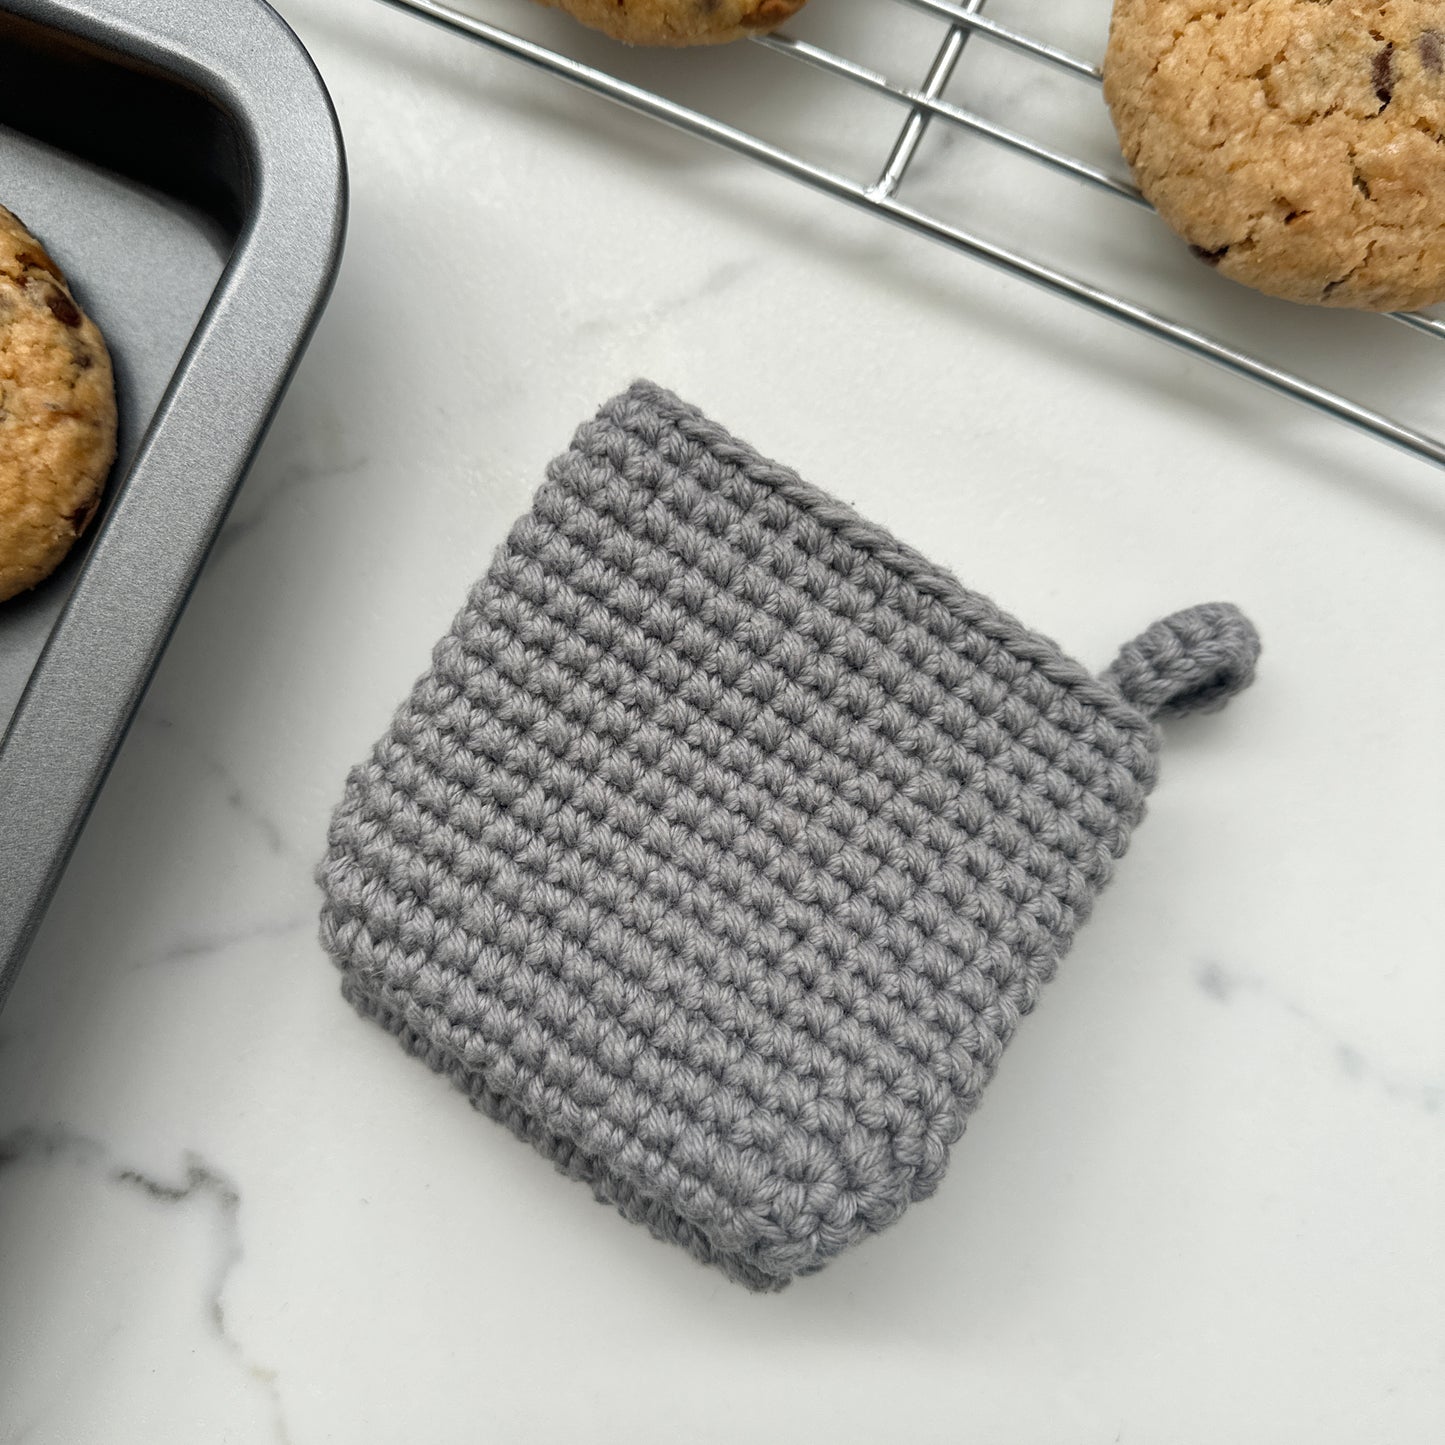 Crochet Potholder Pinch Mitt | exceptional heat resistance